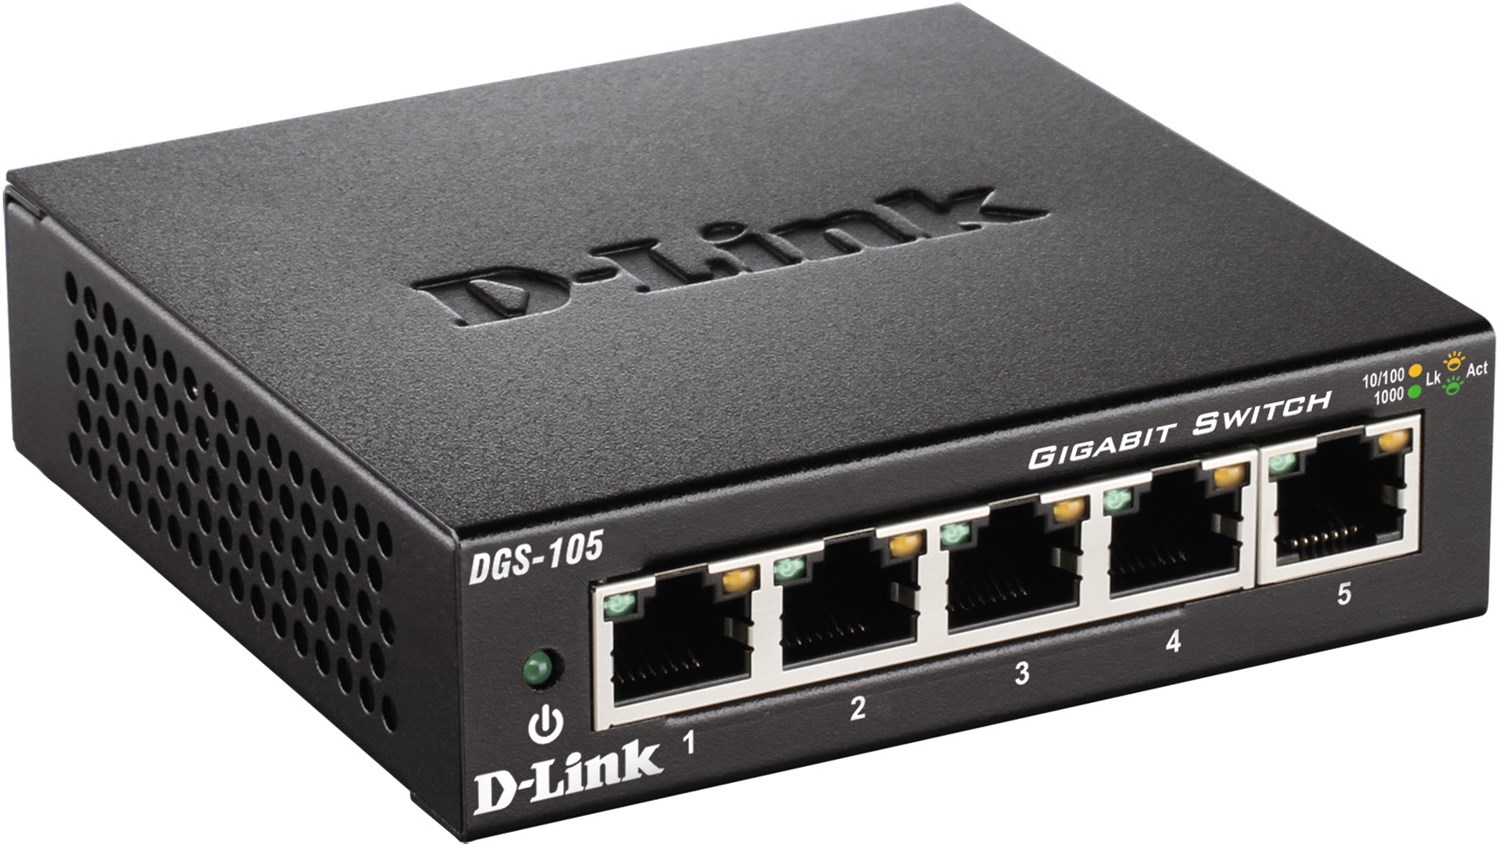 DGS-105 Gigabit Ethernet Switch